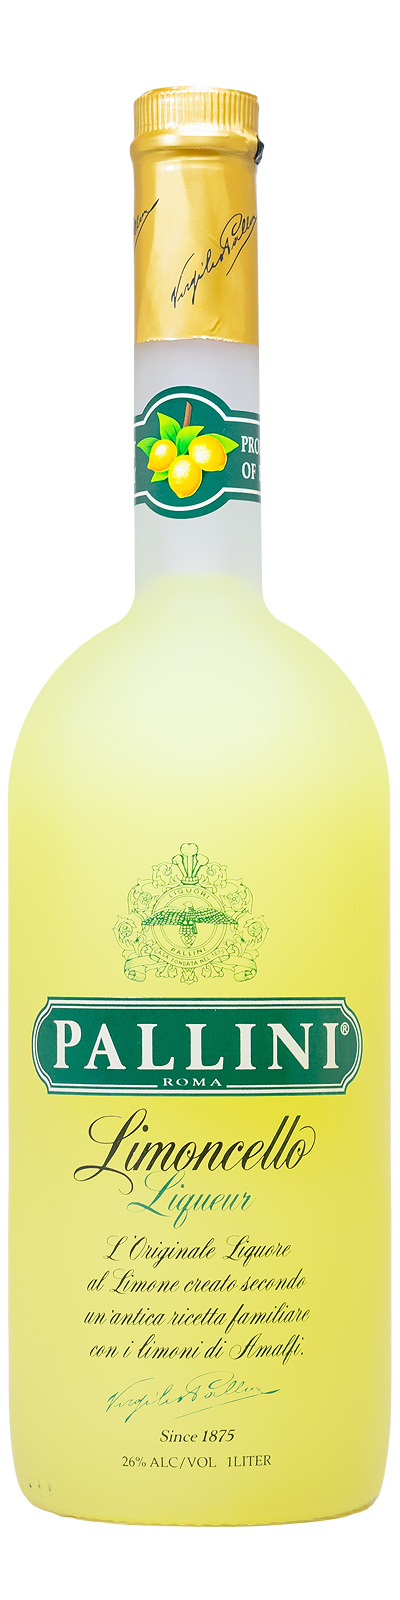 Pallini Limoncello - 1 Liter 26% vol